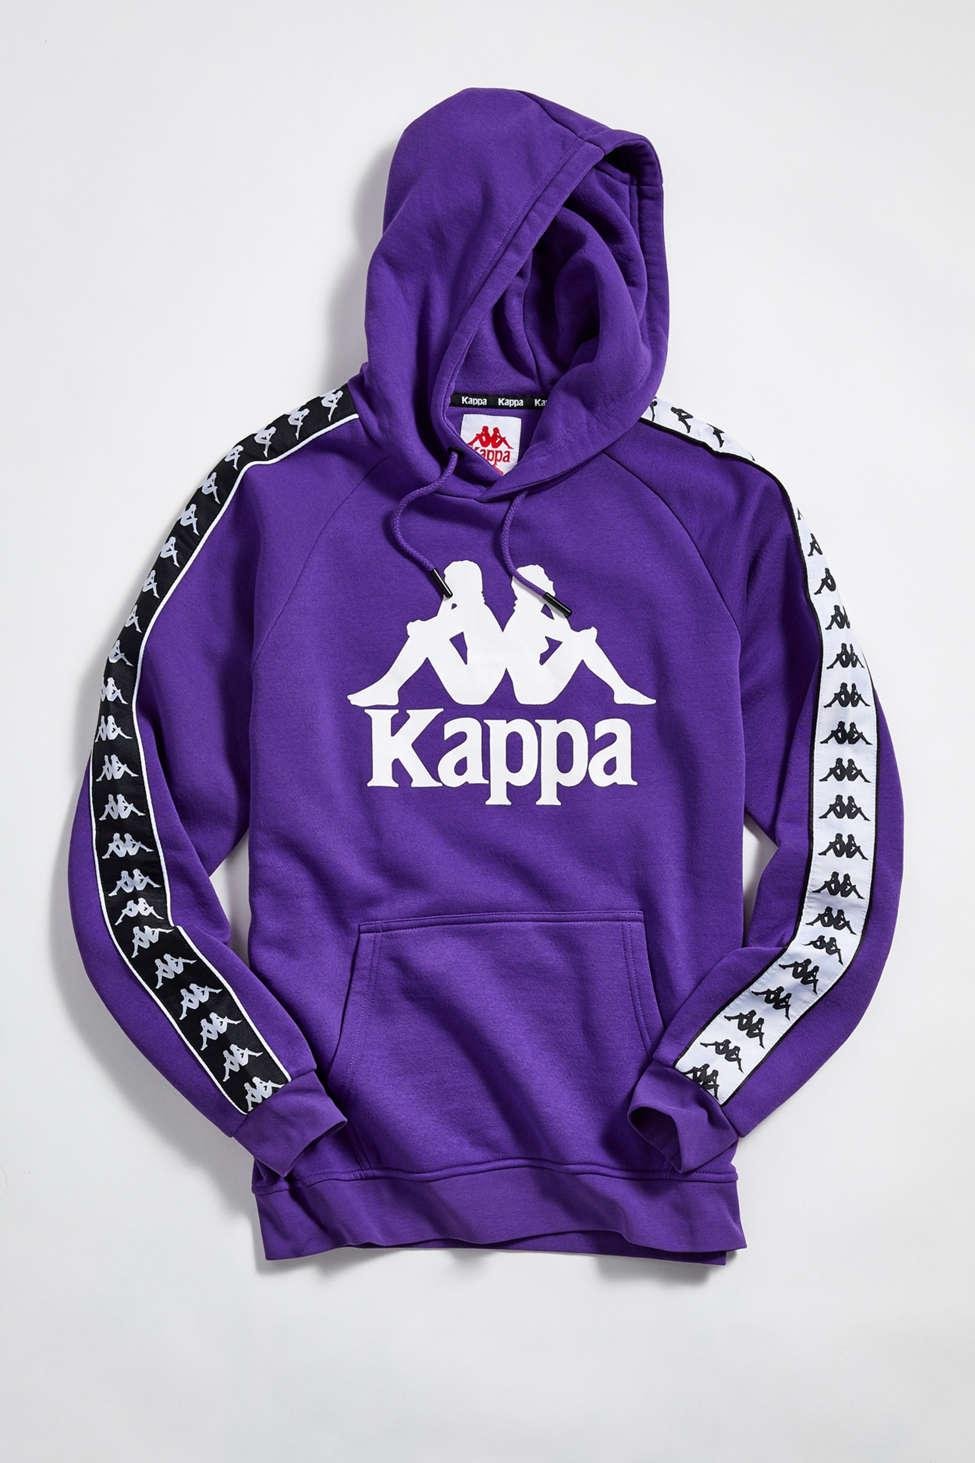 Kappa Cotton Banda Pullover Black Hoodie Sweatshirt in Purple for Men - Lyst